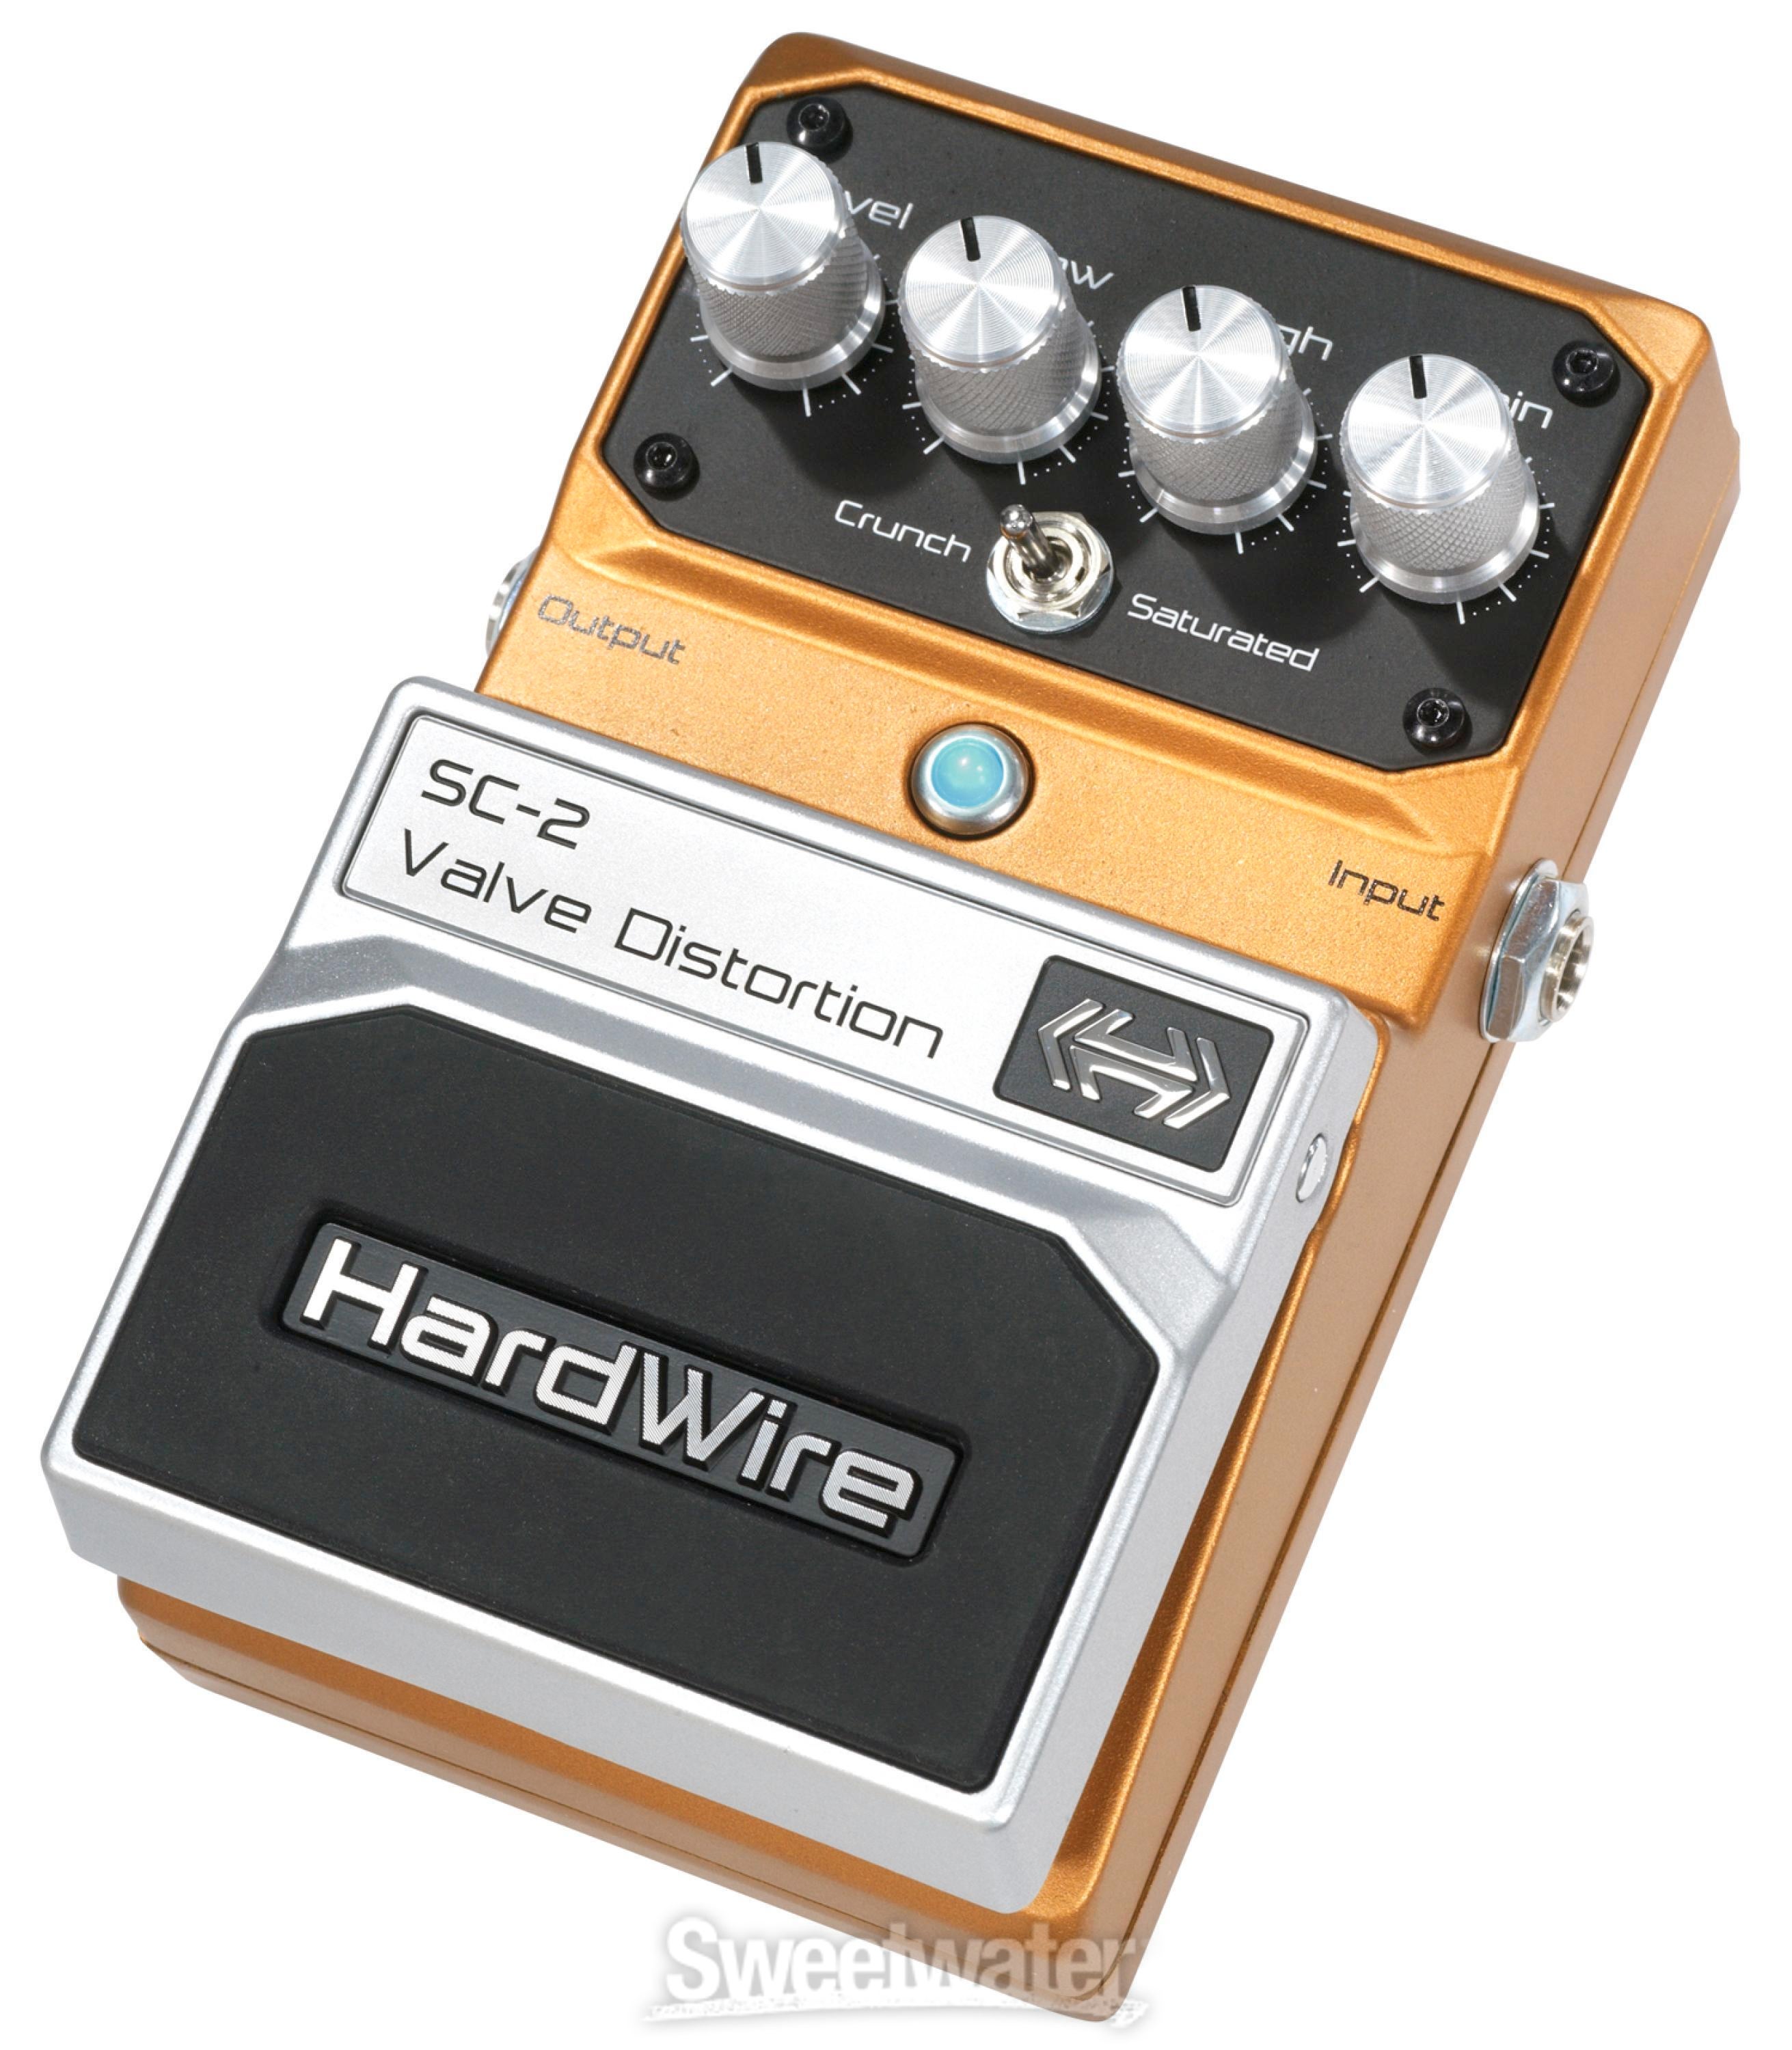 HardWire SC-2 Valve Distortion Pedal